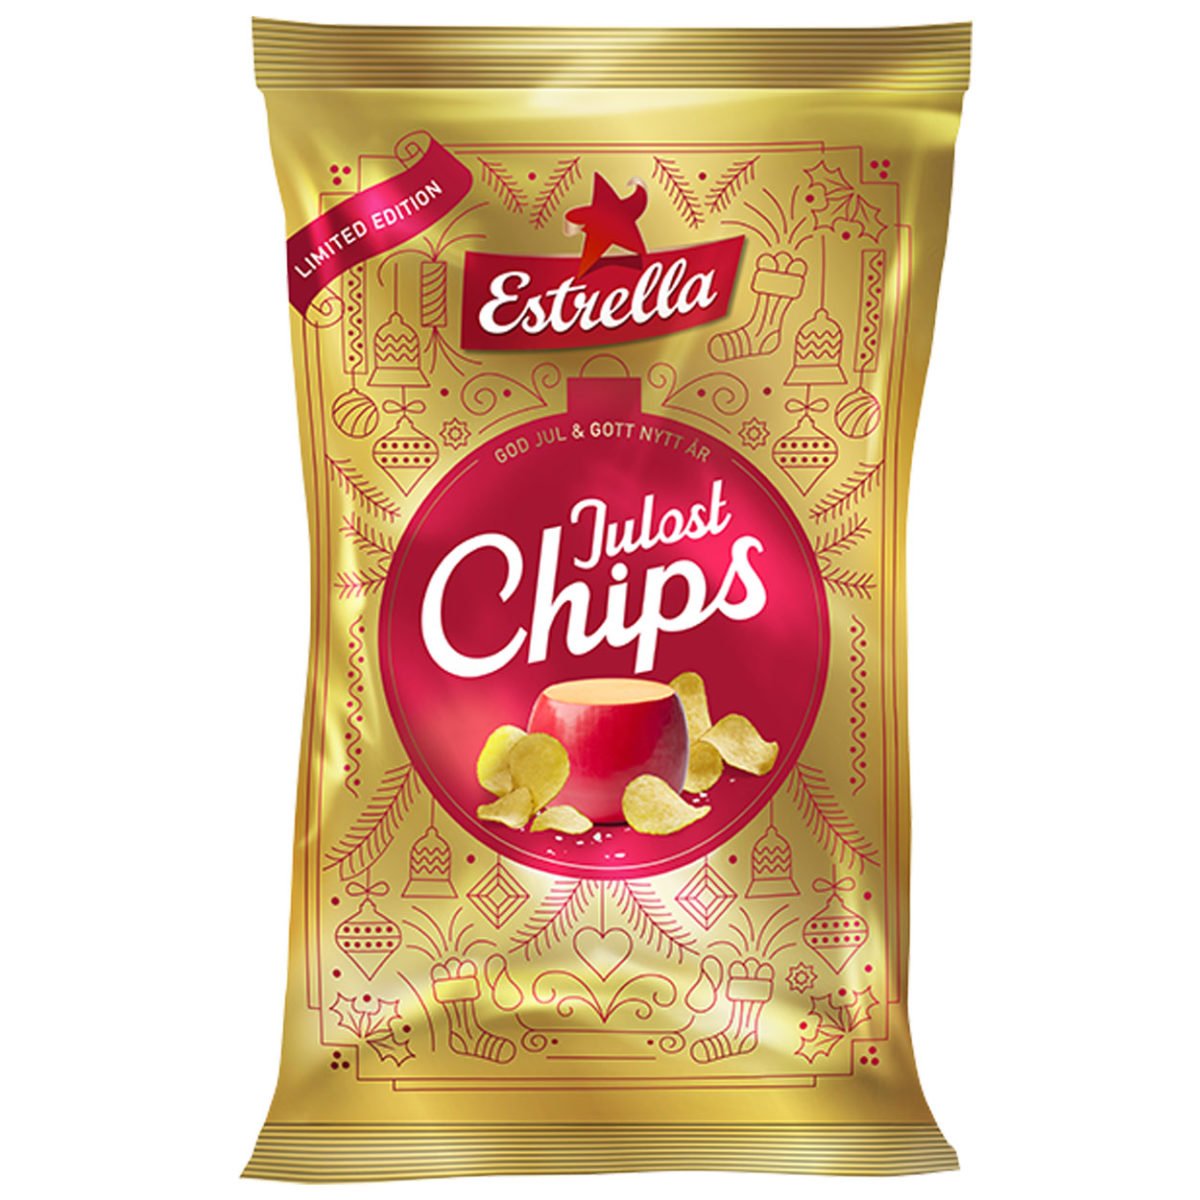 Estrella Julost Chips - Limited Edition (160g) 1